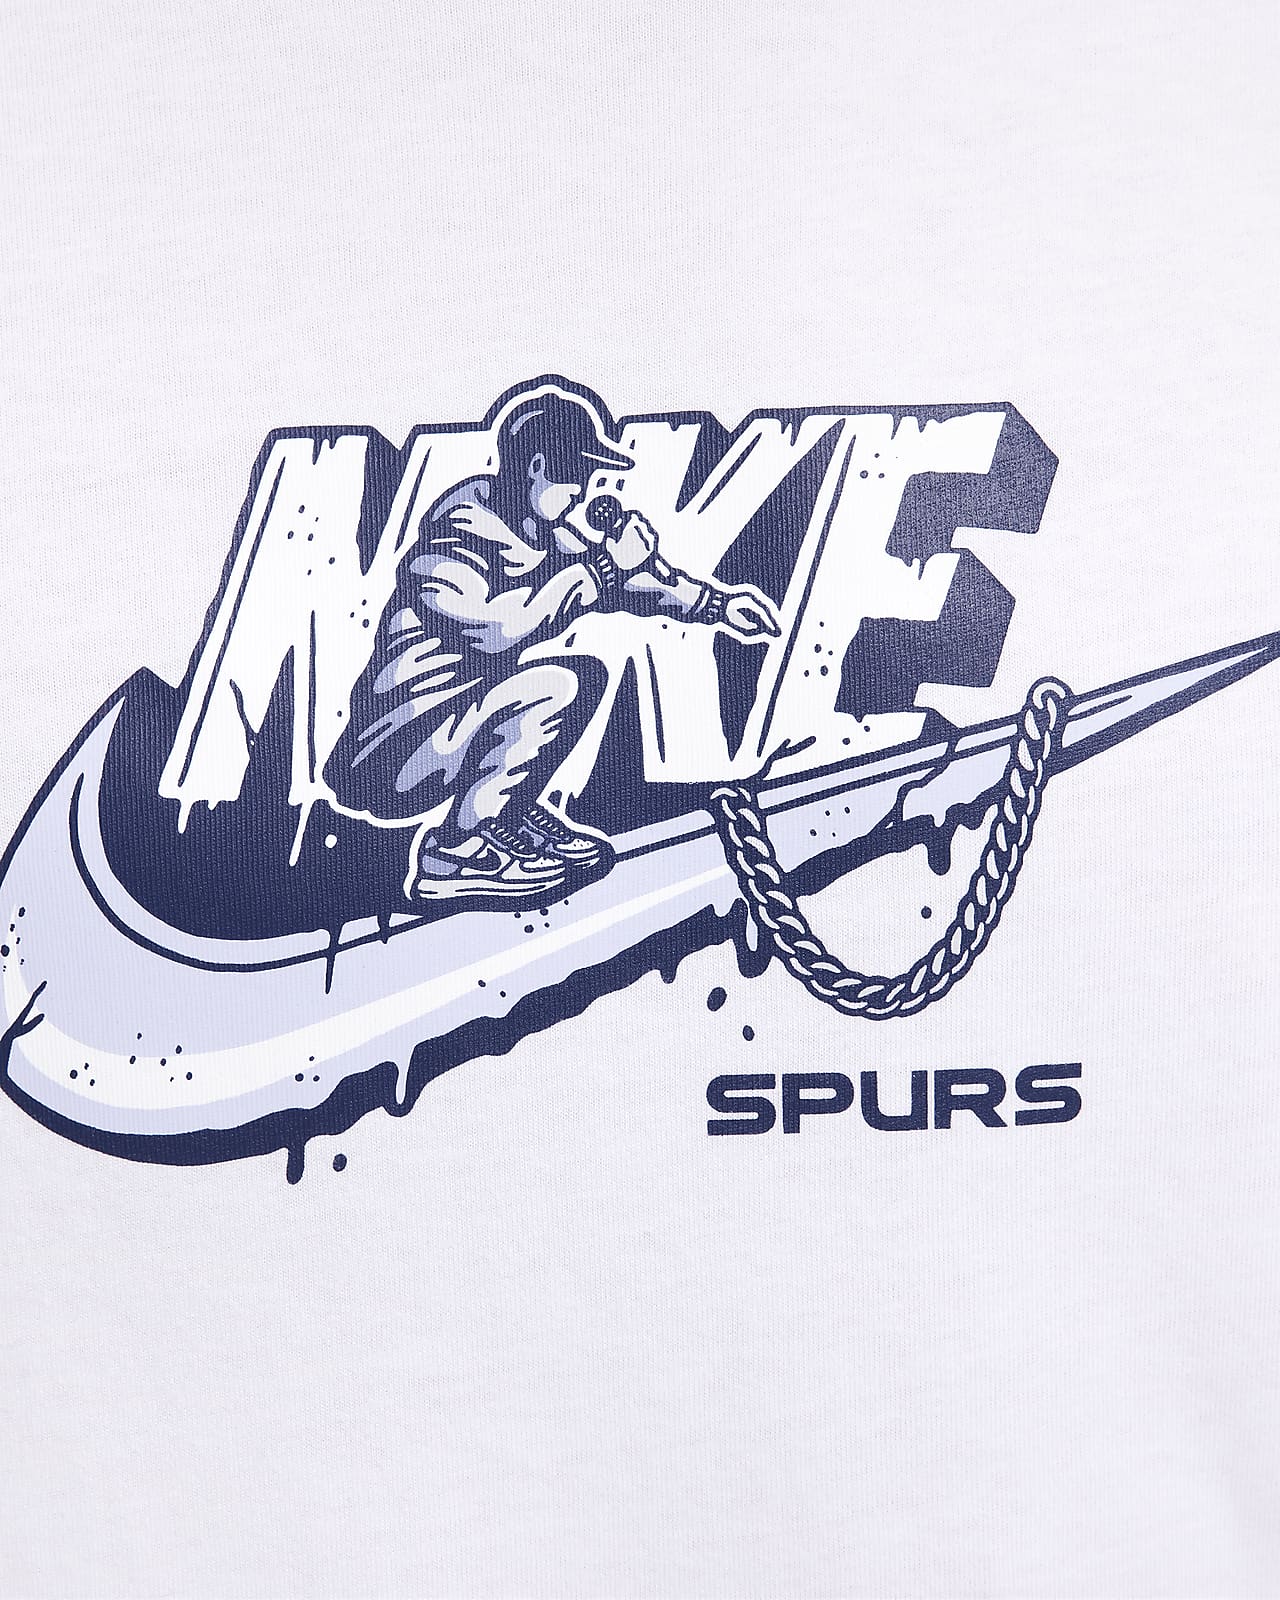 Tottenham Hotspur Men's Soccer T-Shirt. Nike.com